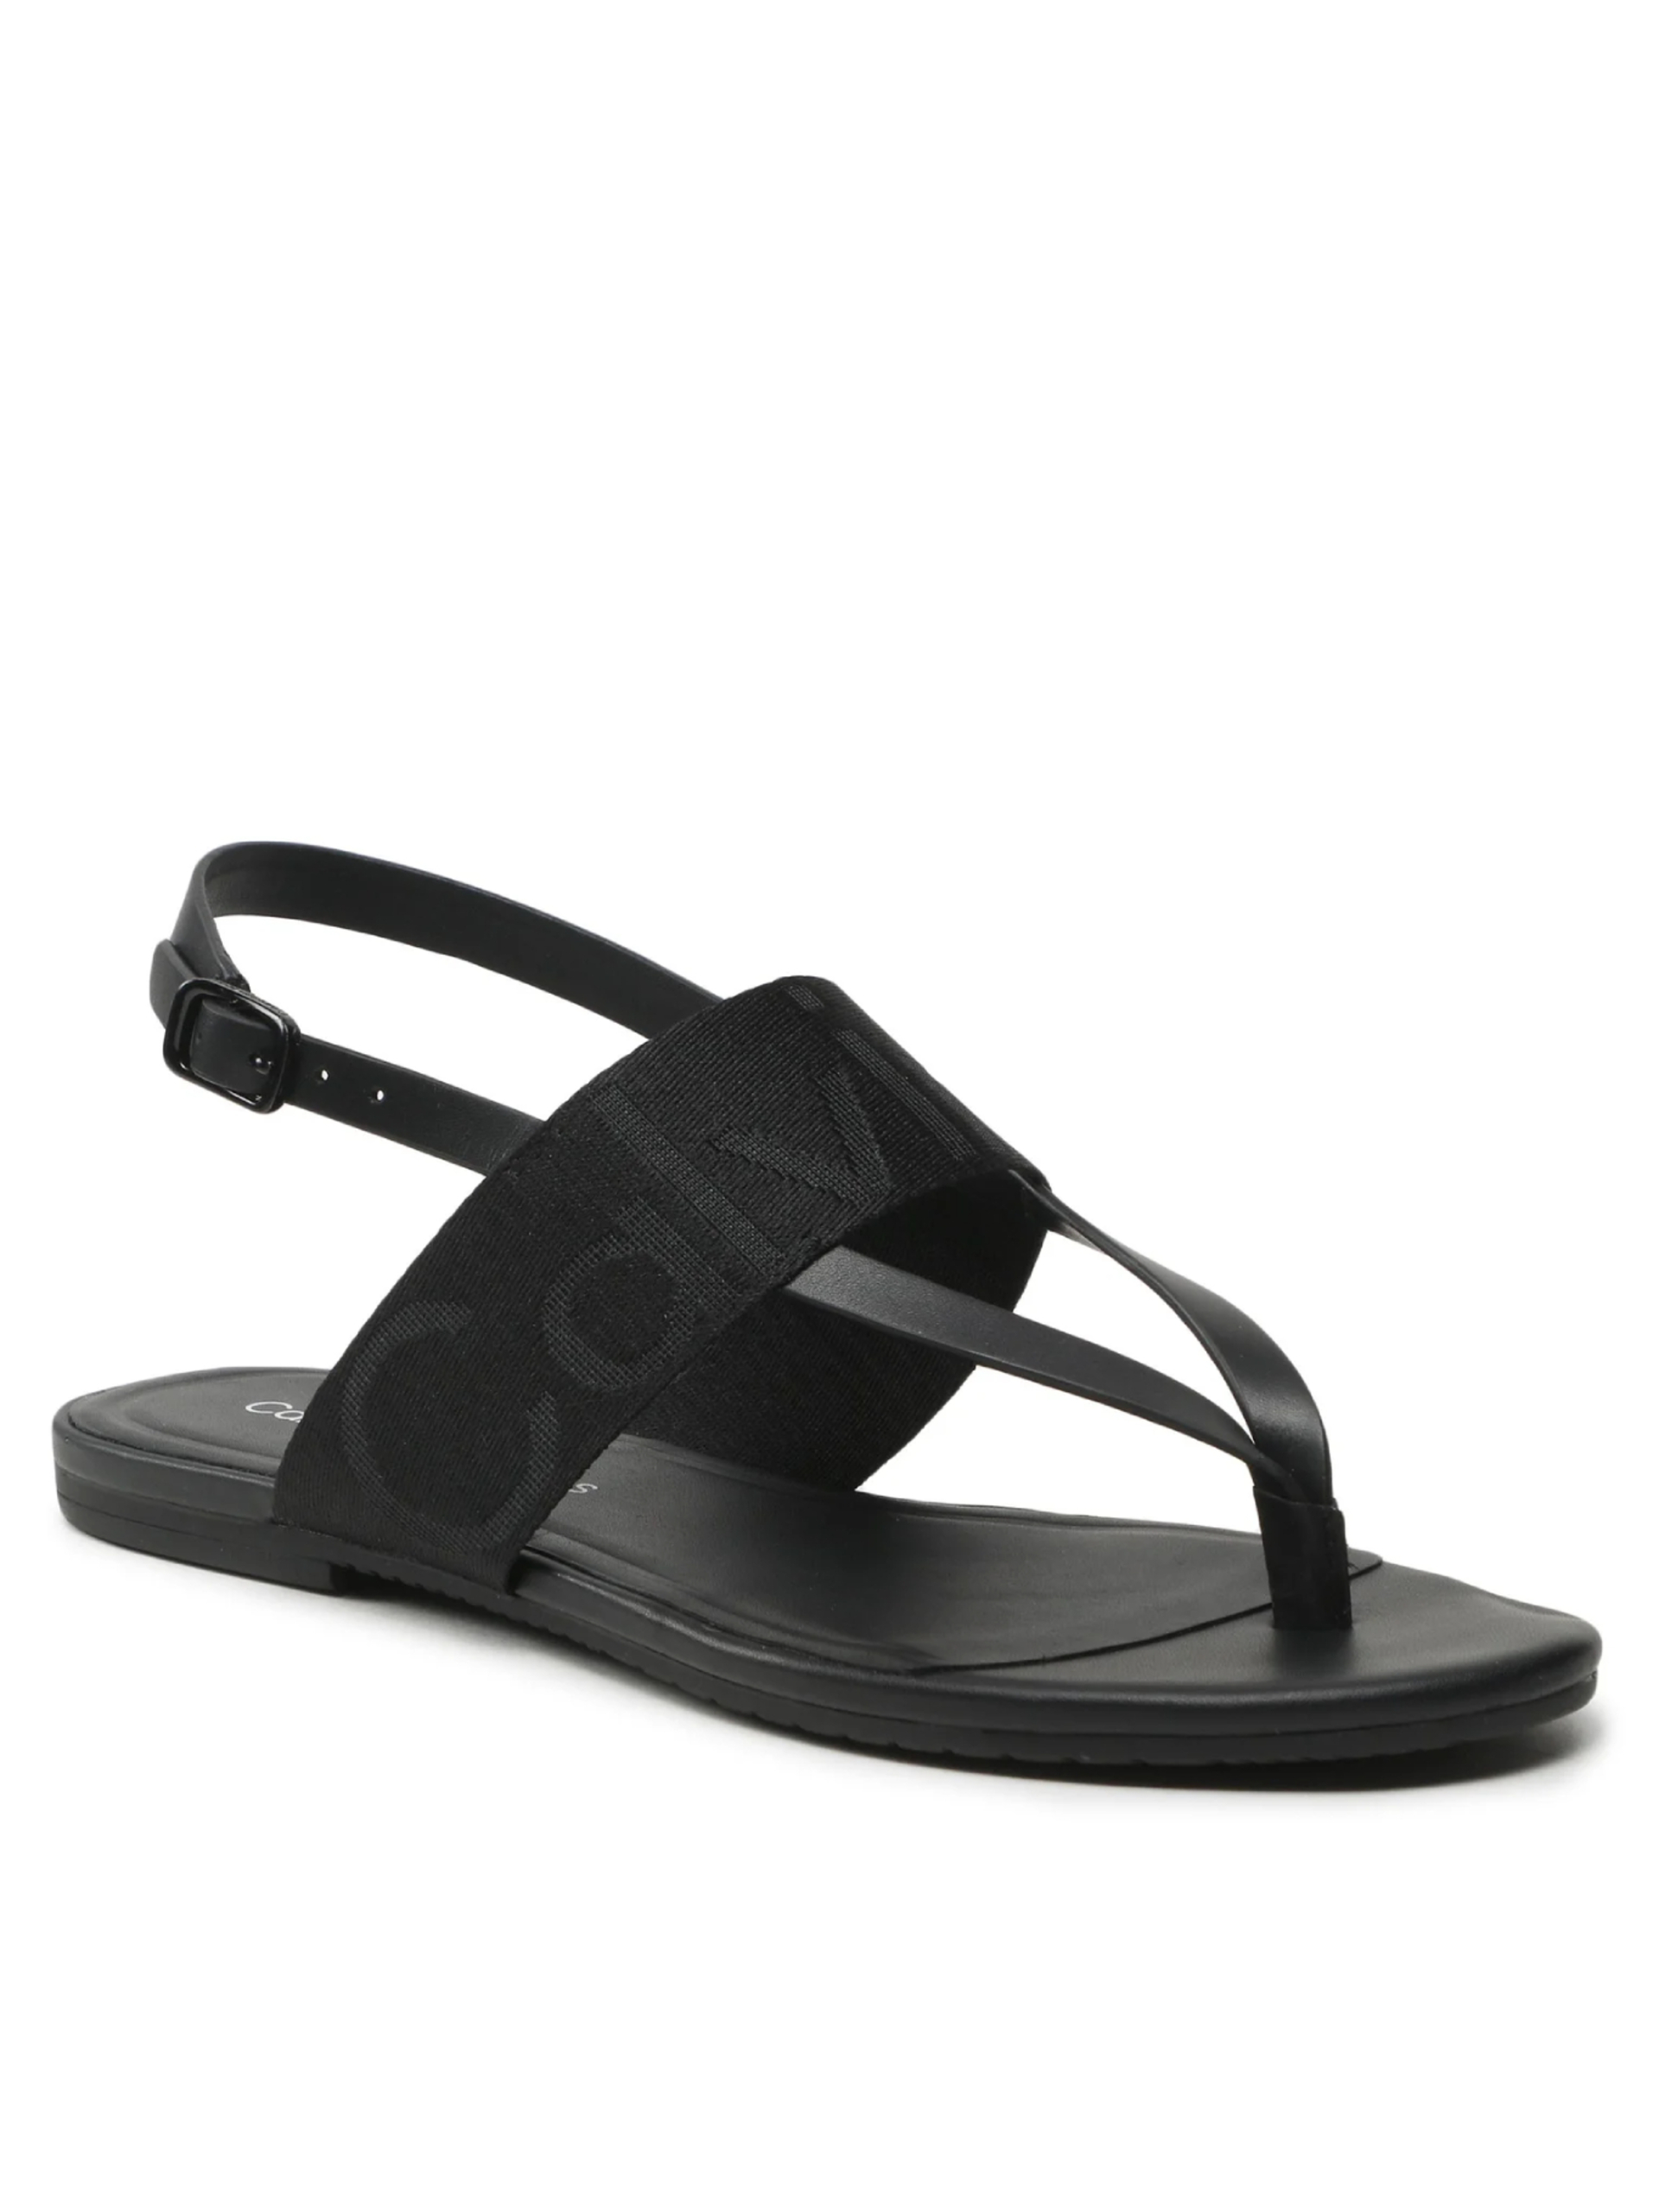 Calvin Klein dámské černé sandály FLAT SANDAL TOEPOST WEBBING